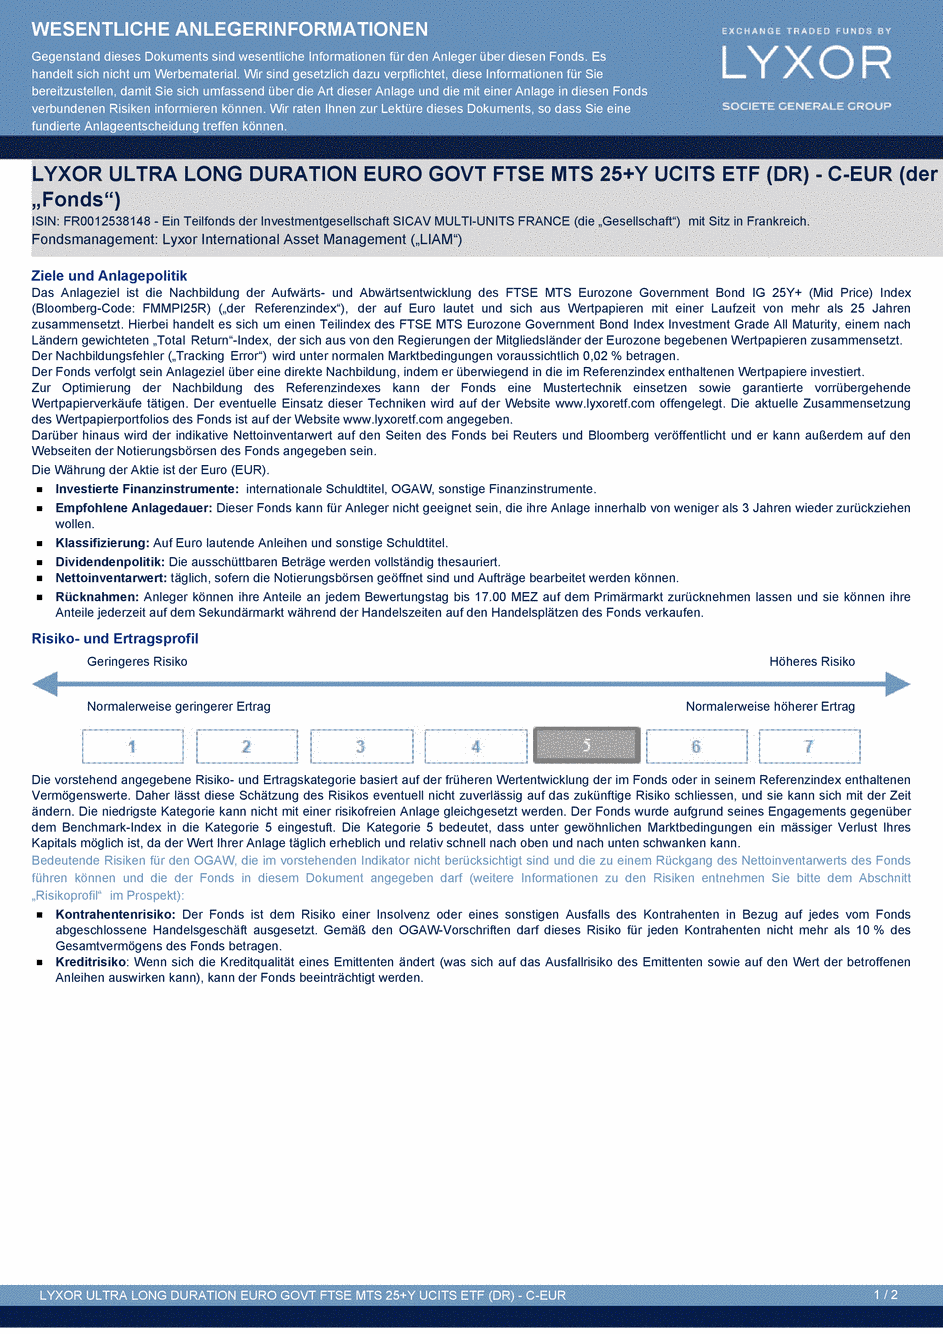 DICI LYXOR ULTRA LONG DURATION EURO GOVT FTSE MTS 25+Y (DR) UCITS ETF - C-EUR - 26/03/2015 - Allemand